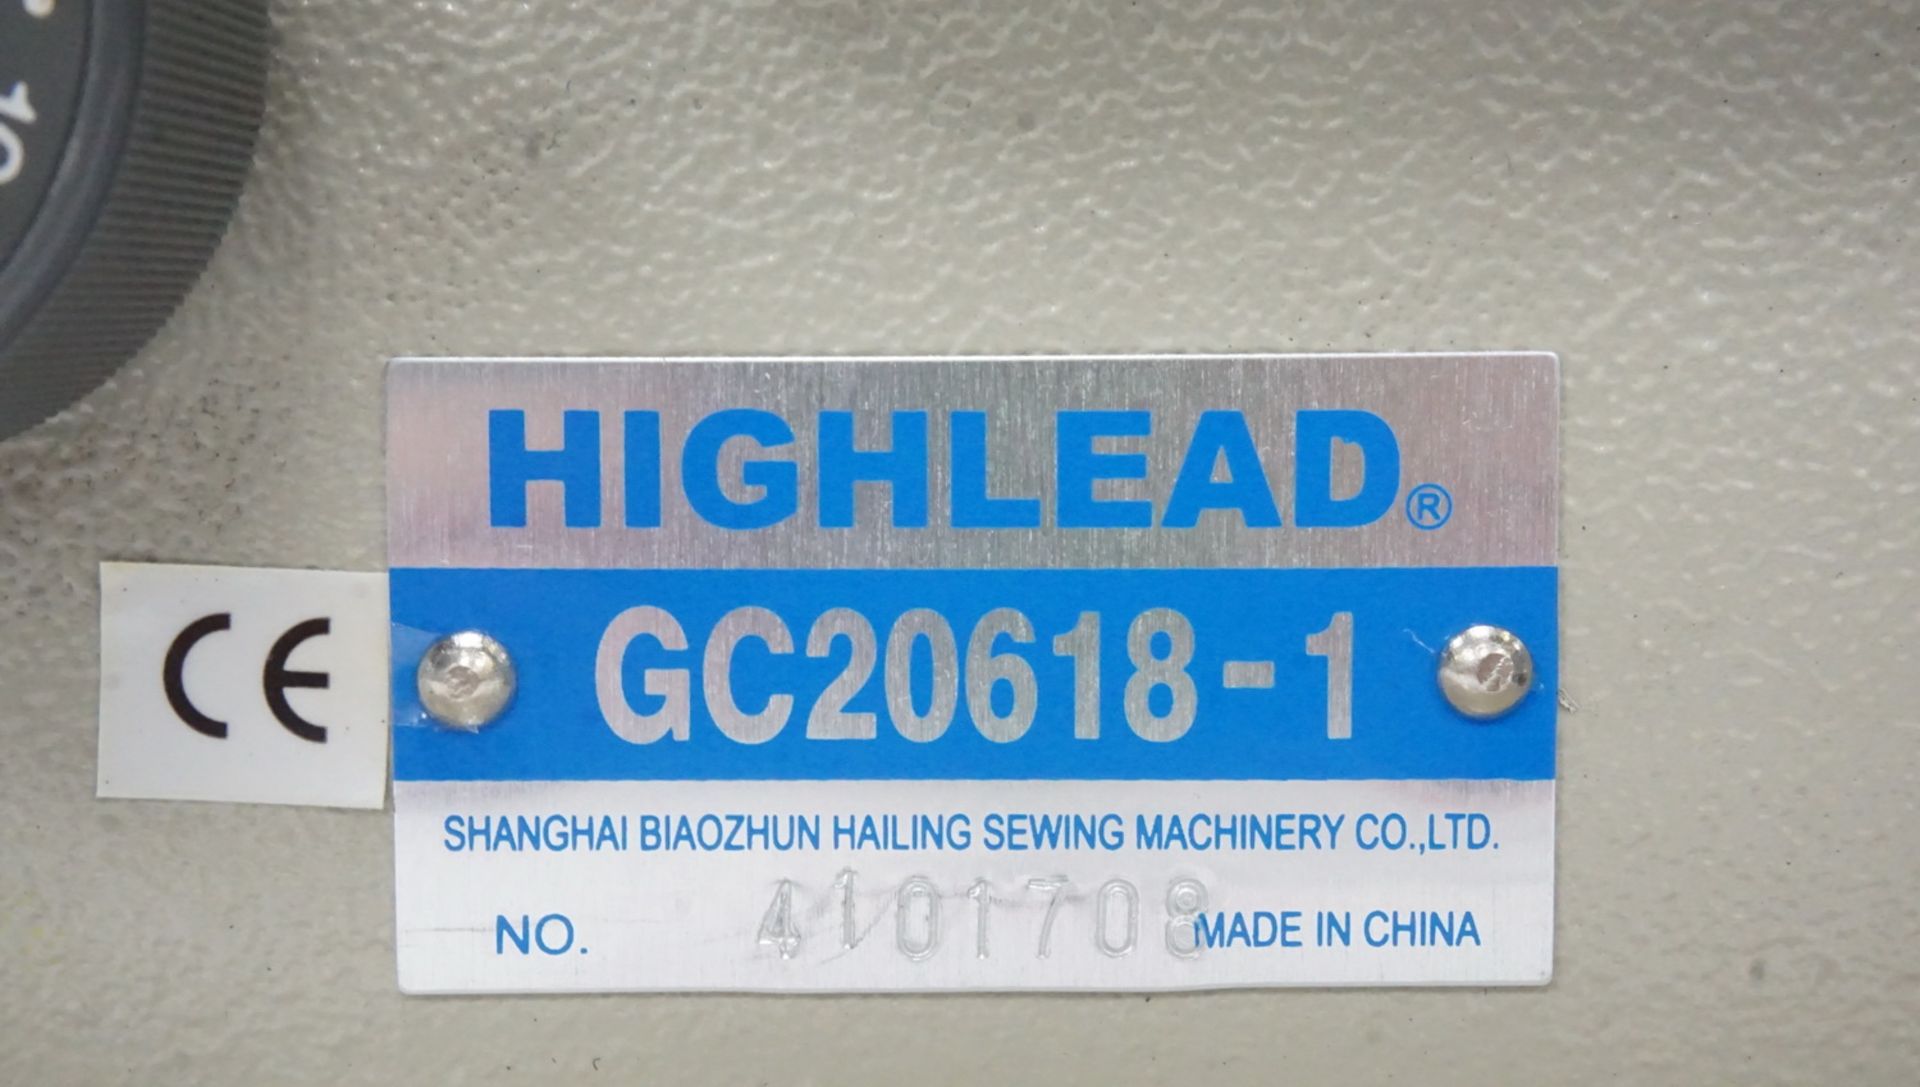 HIGHLEAD GC20618-1 SINGLE NEEDLE WALKING FOOT MACHINE, S/N 4101708 - Image 5 of 5